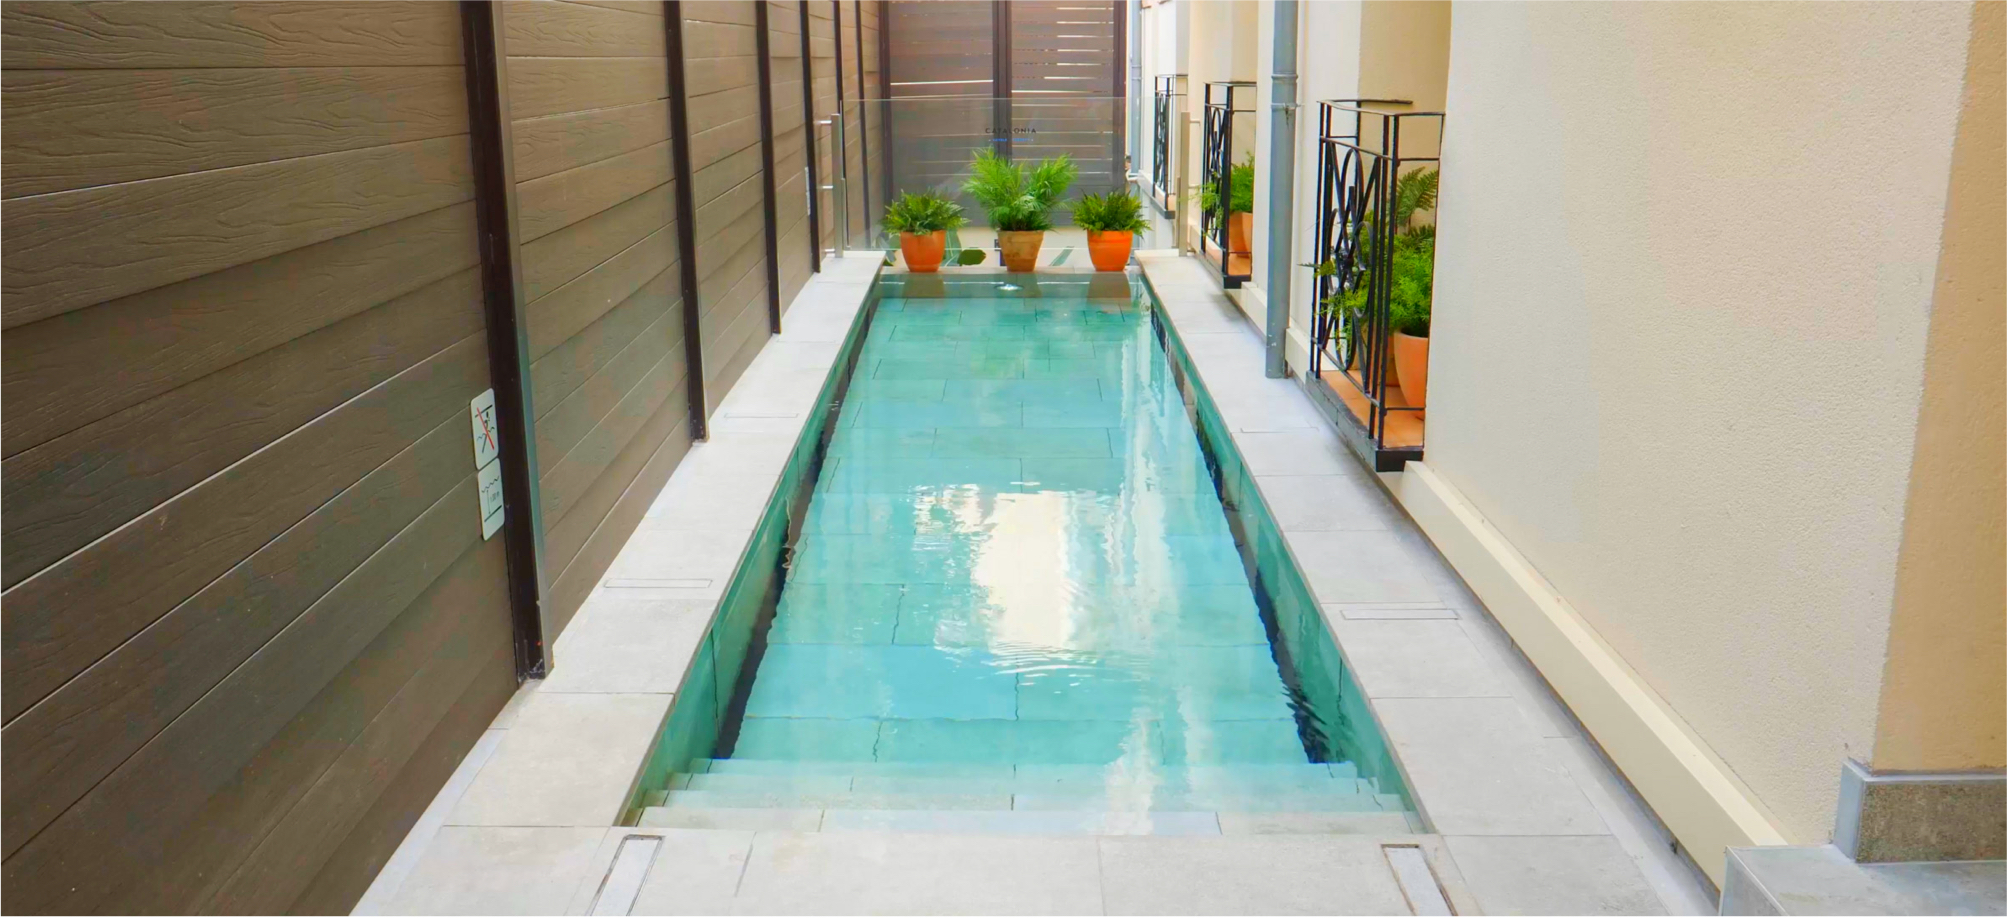 Concept de piscine terrasse ouverte